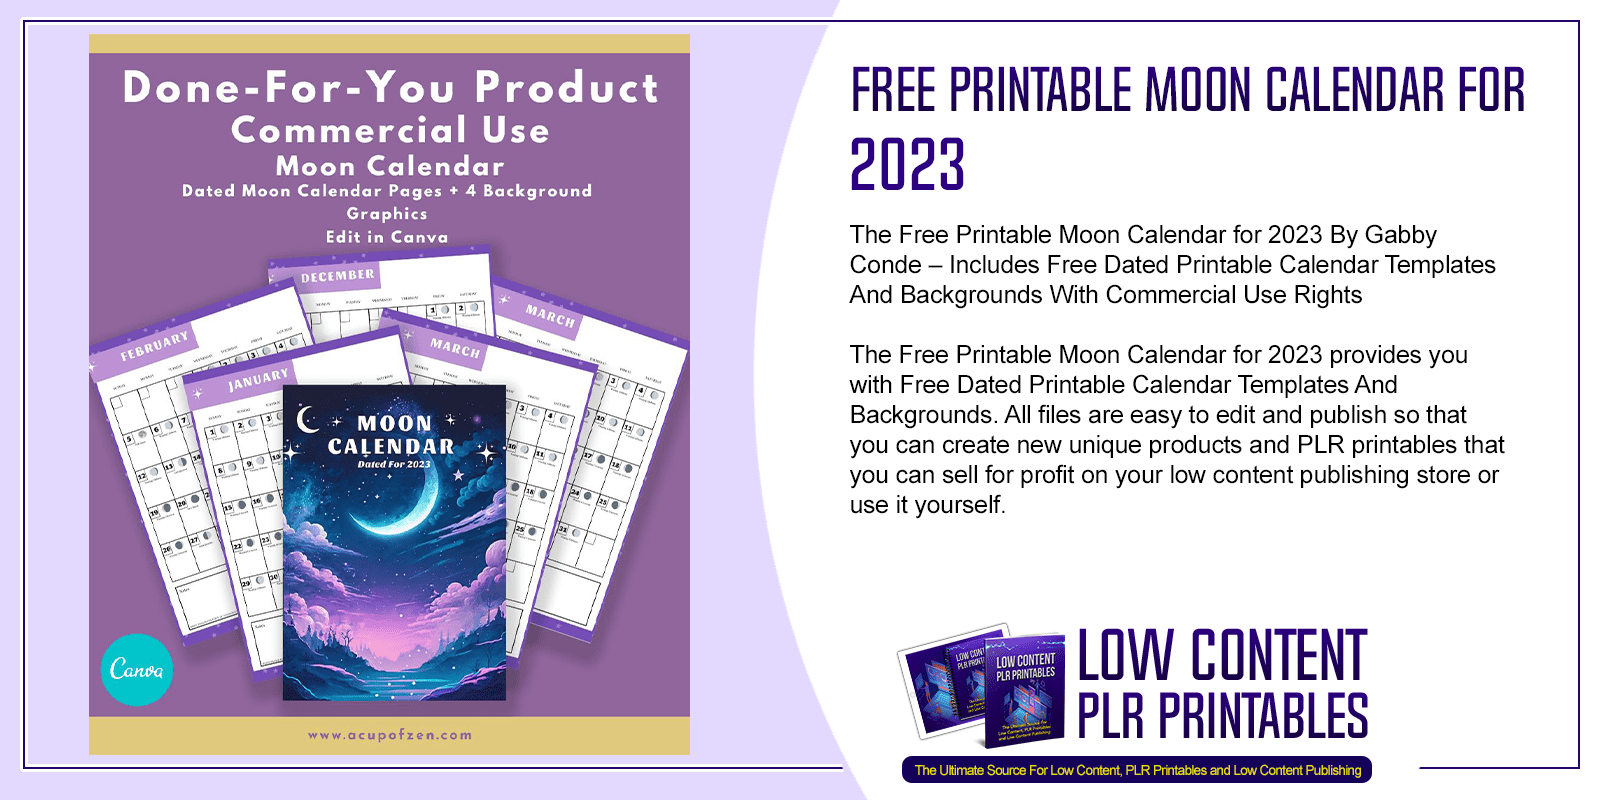 Free Printable Moon Calendar for 2023